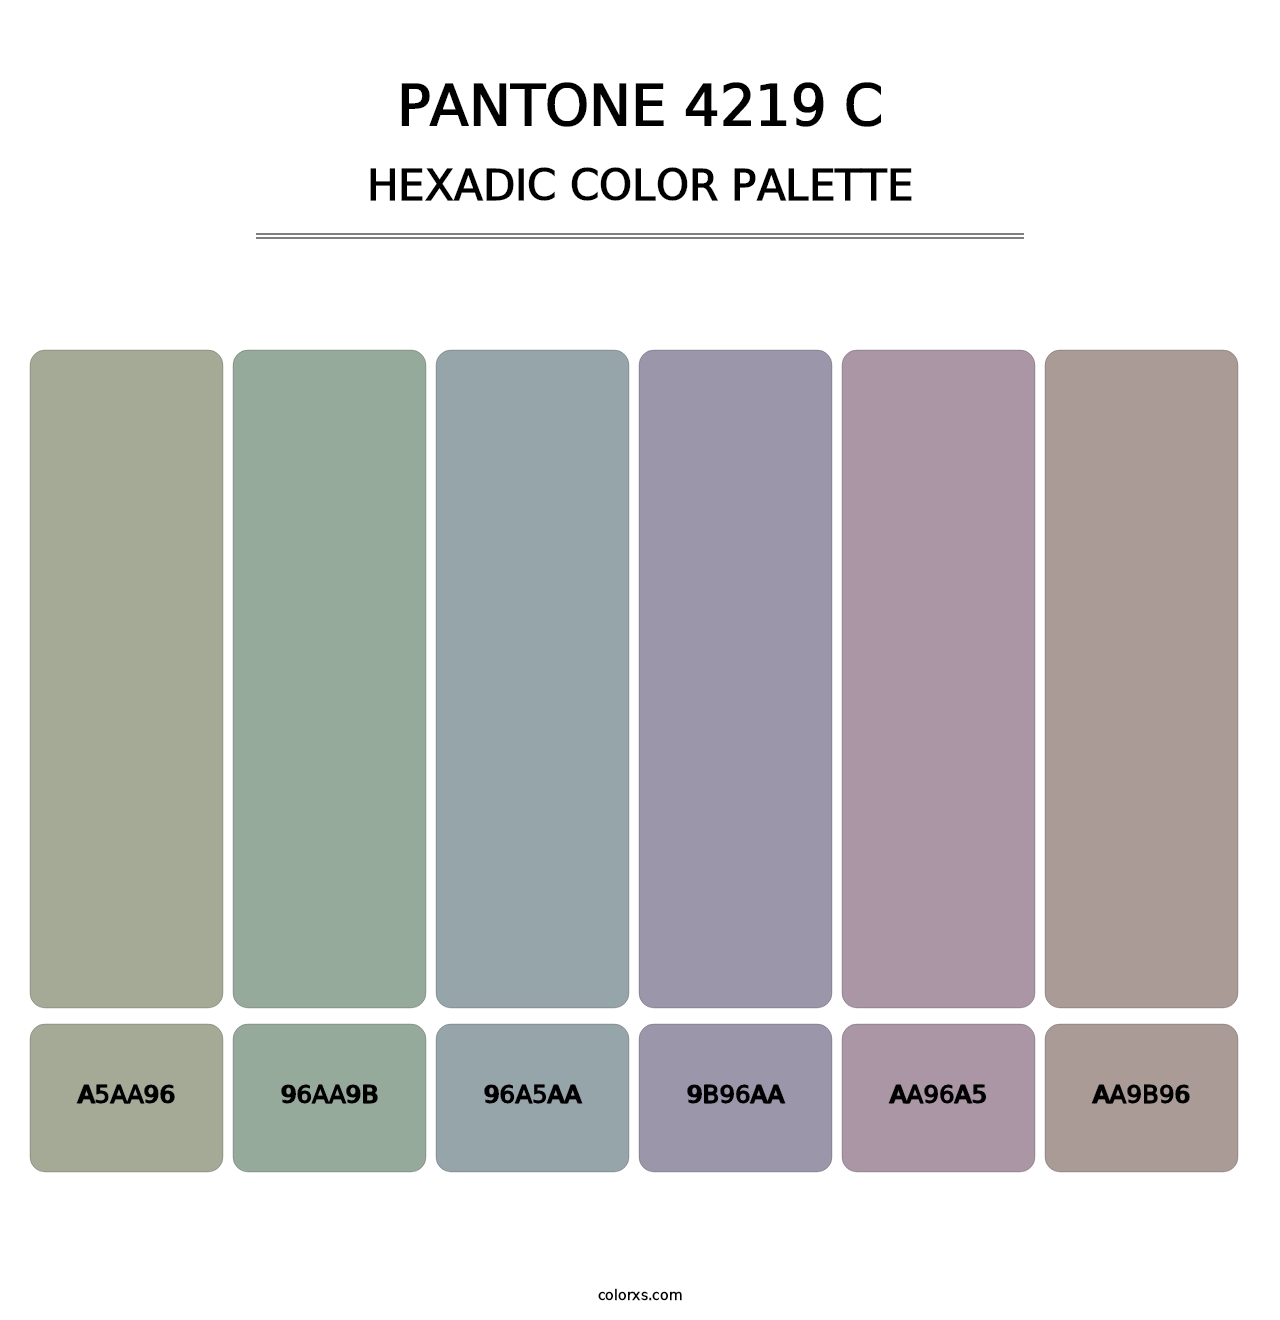 PANTONE 4219 C - Hexadic Color Palette